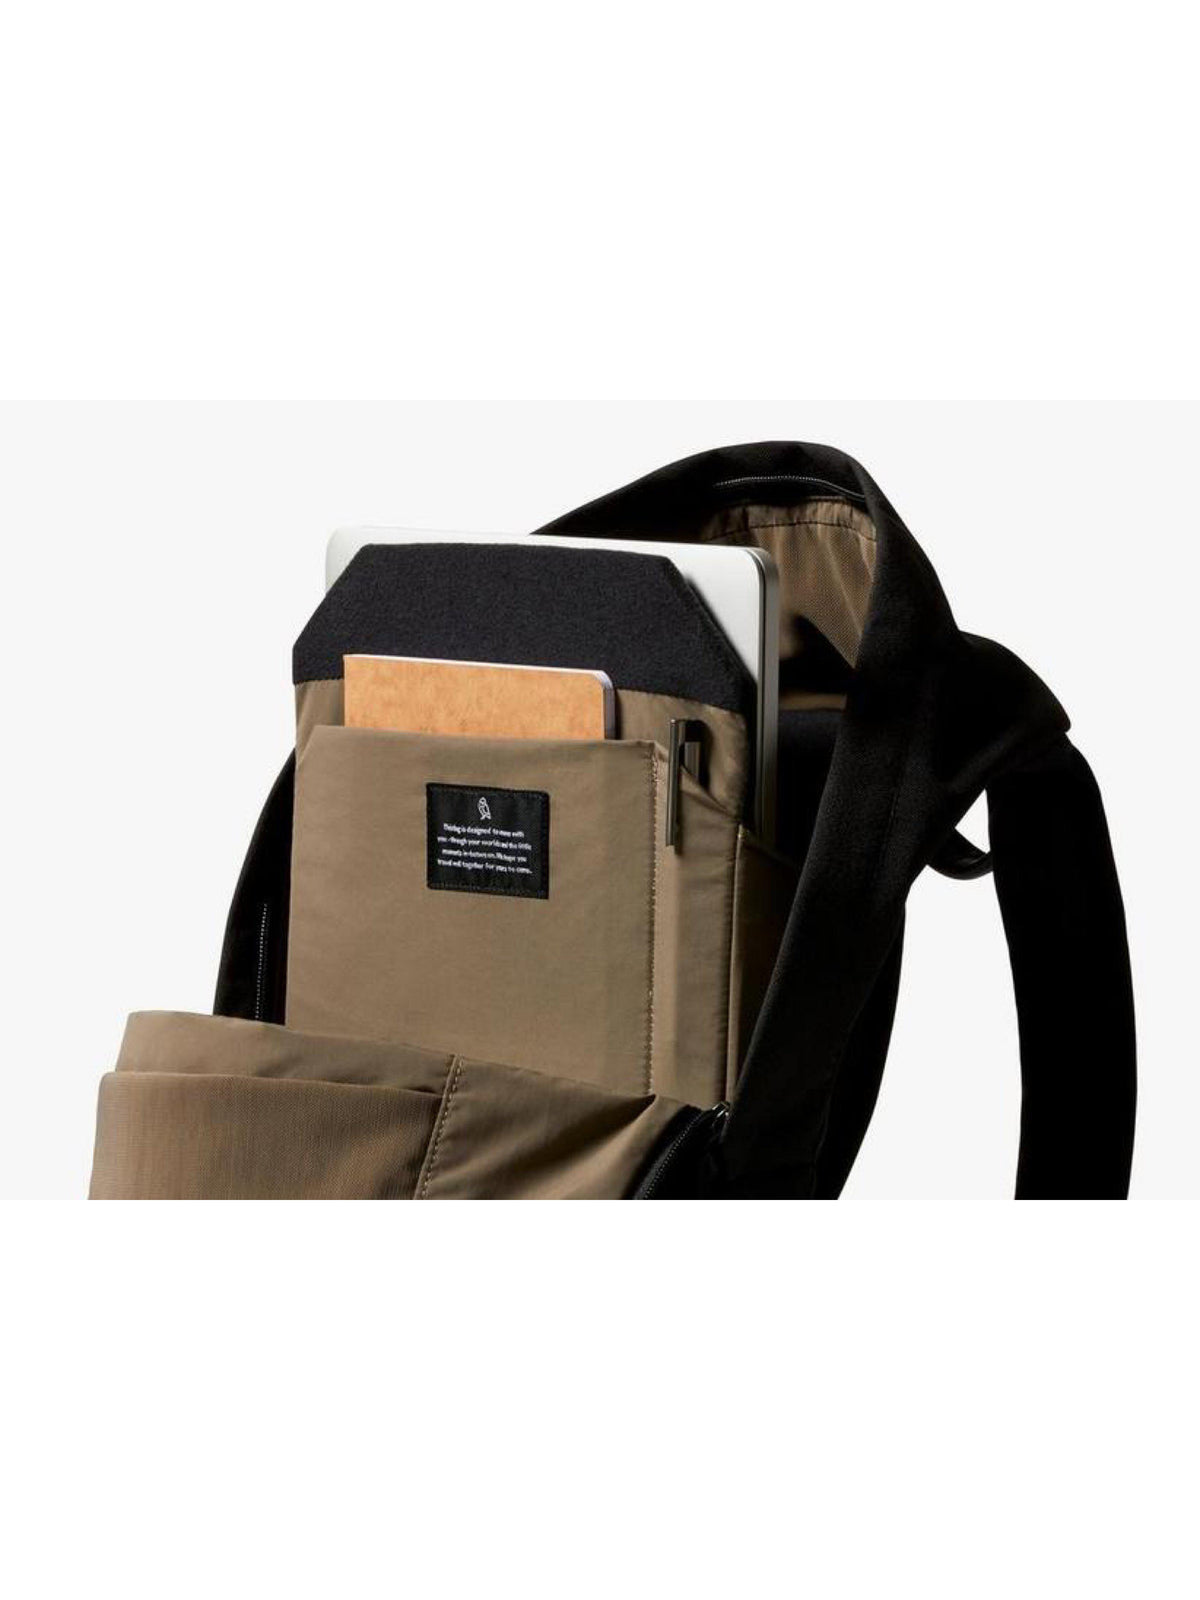 Bellroy Classic Backpack Black V1